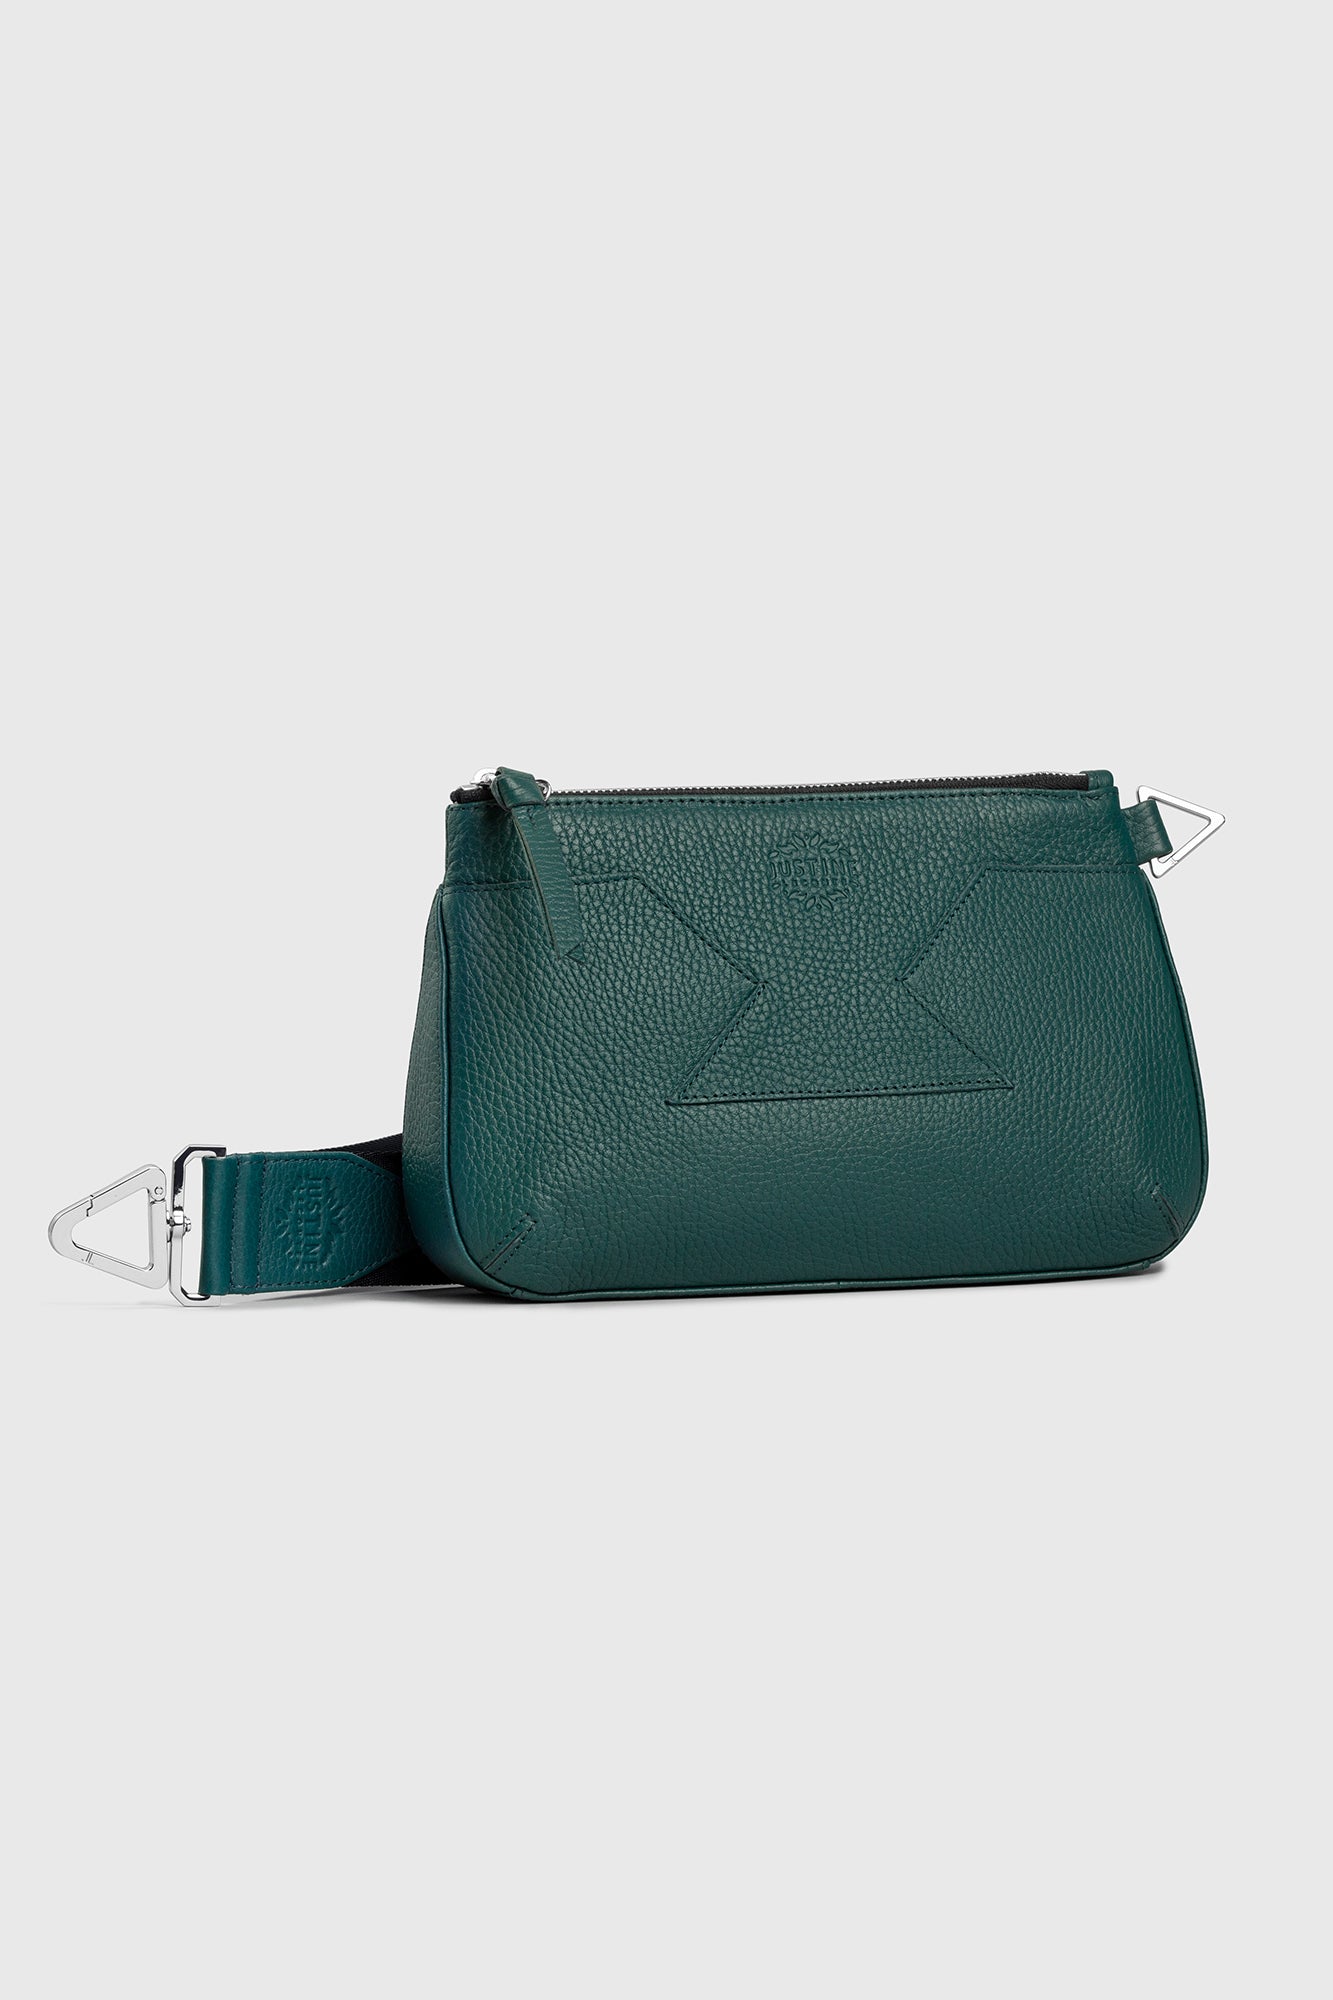 JL clutch bag leather - Teal green